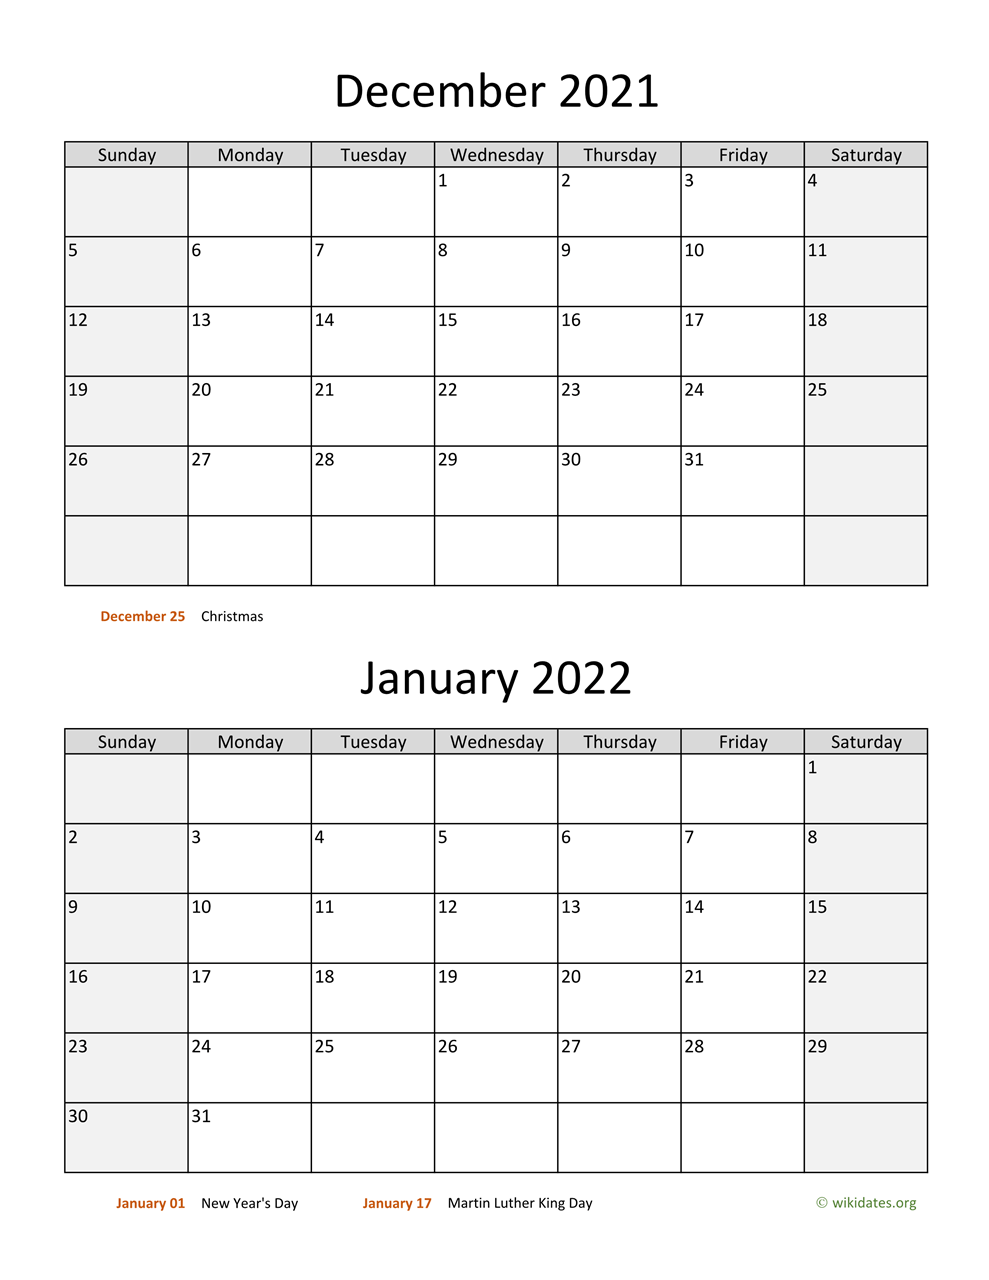 December 2021 January 2022 Calendar Printable December 2021 And January 2022 Calendar | Wikidates.org